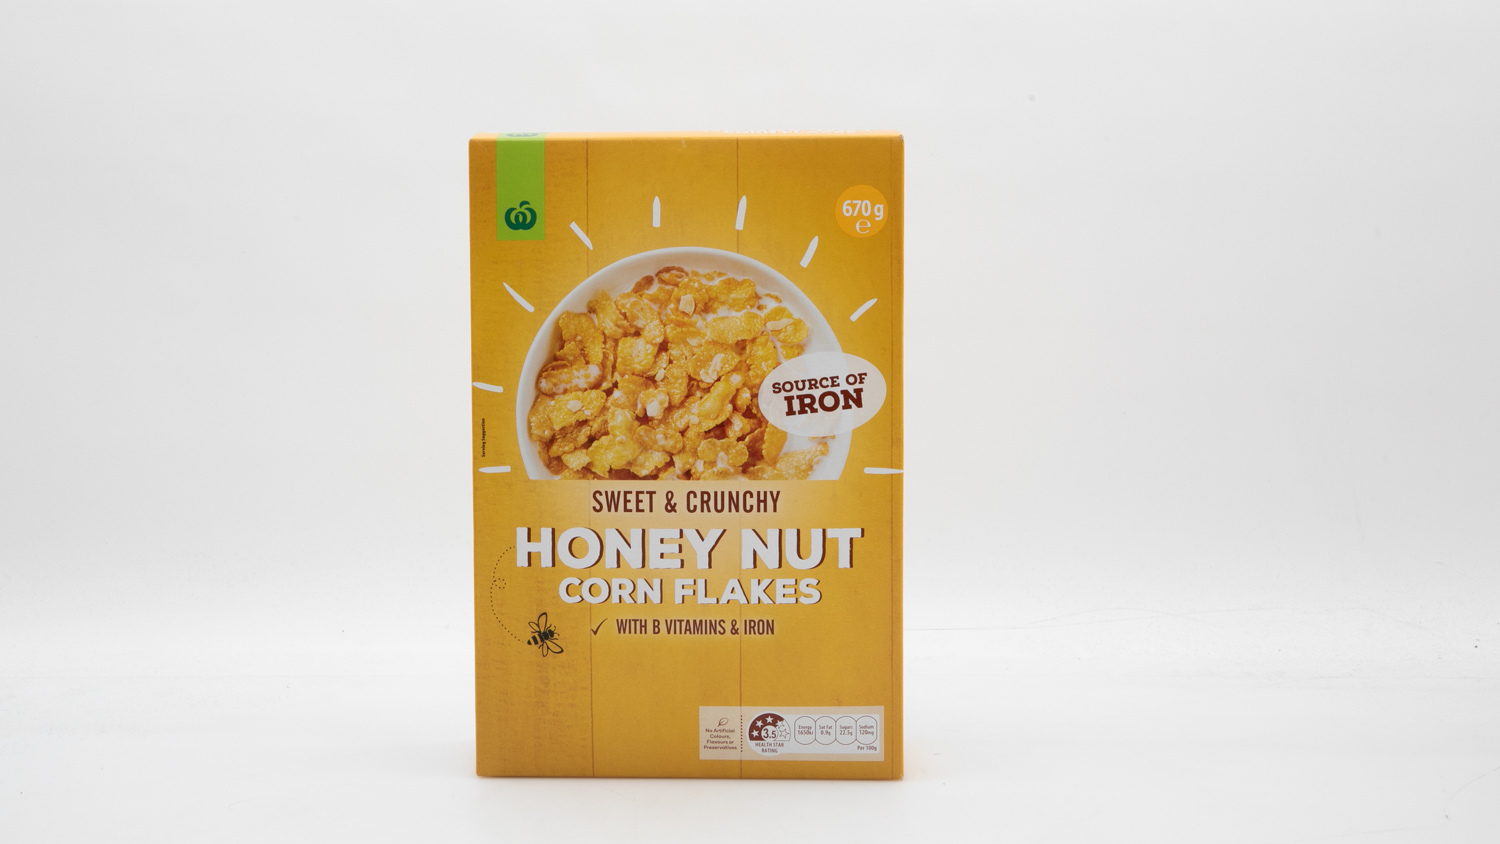 https://pdbimg.choice.com.au/woolworths-honey-nut-corn-flakes_1.jpg